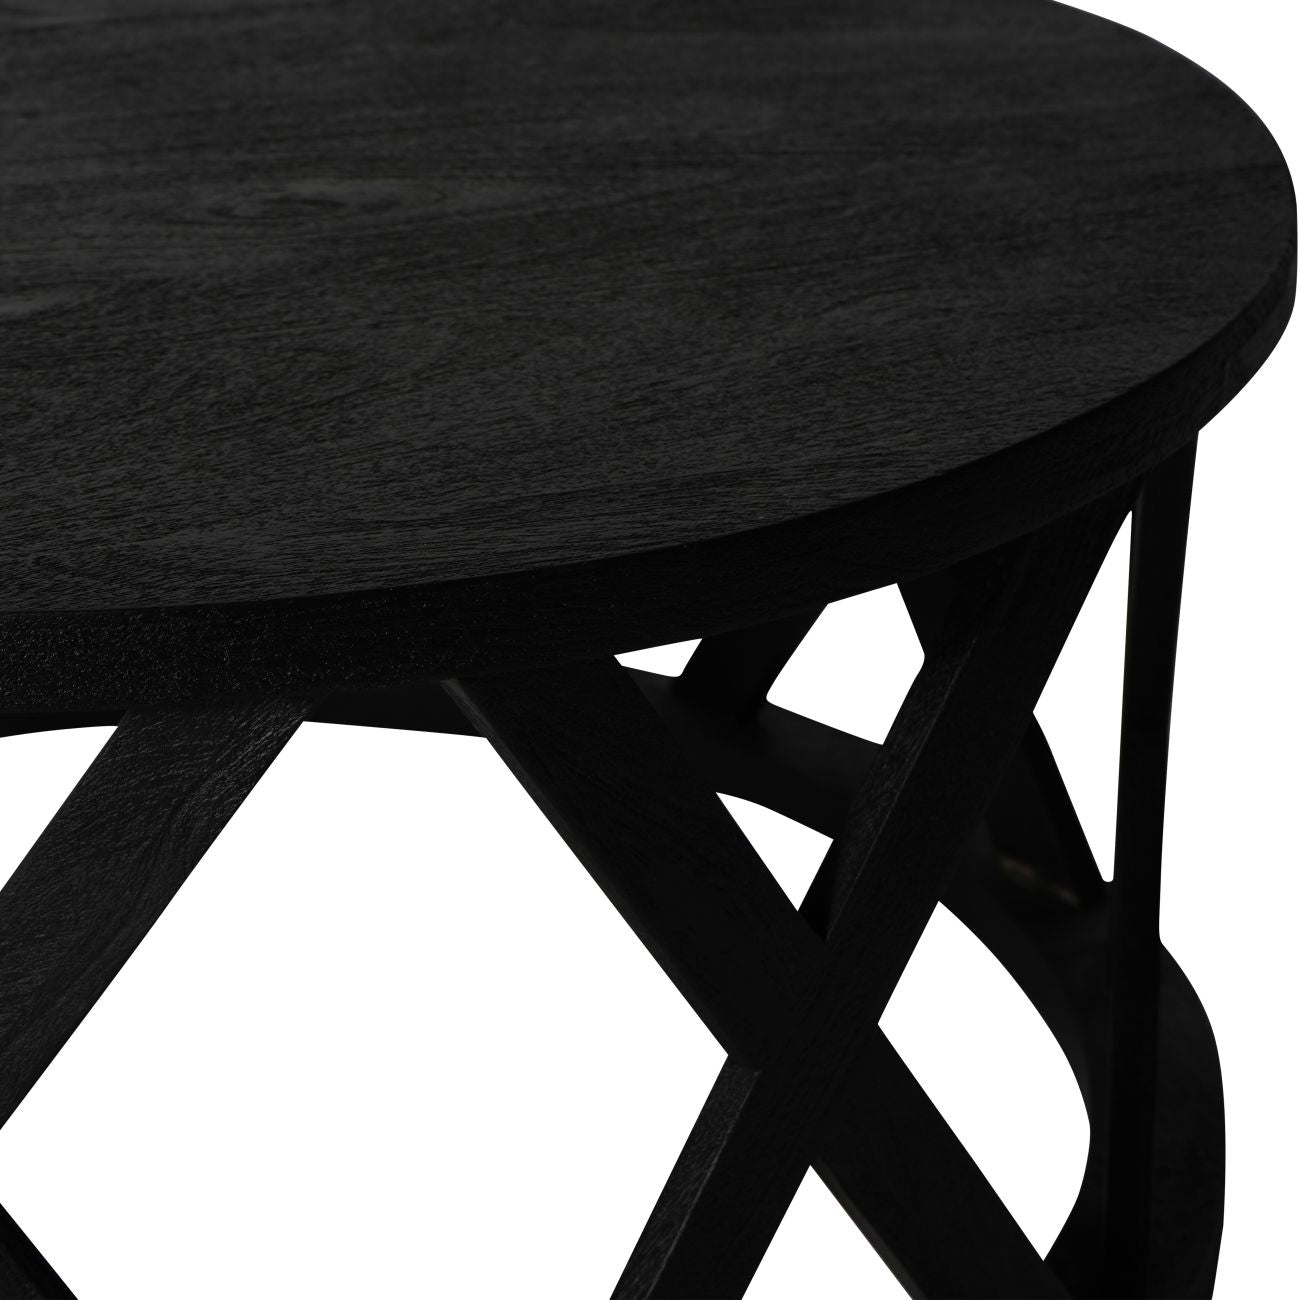 SOLU Solid Wooden Coffee Table in Black